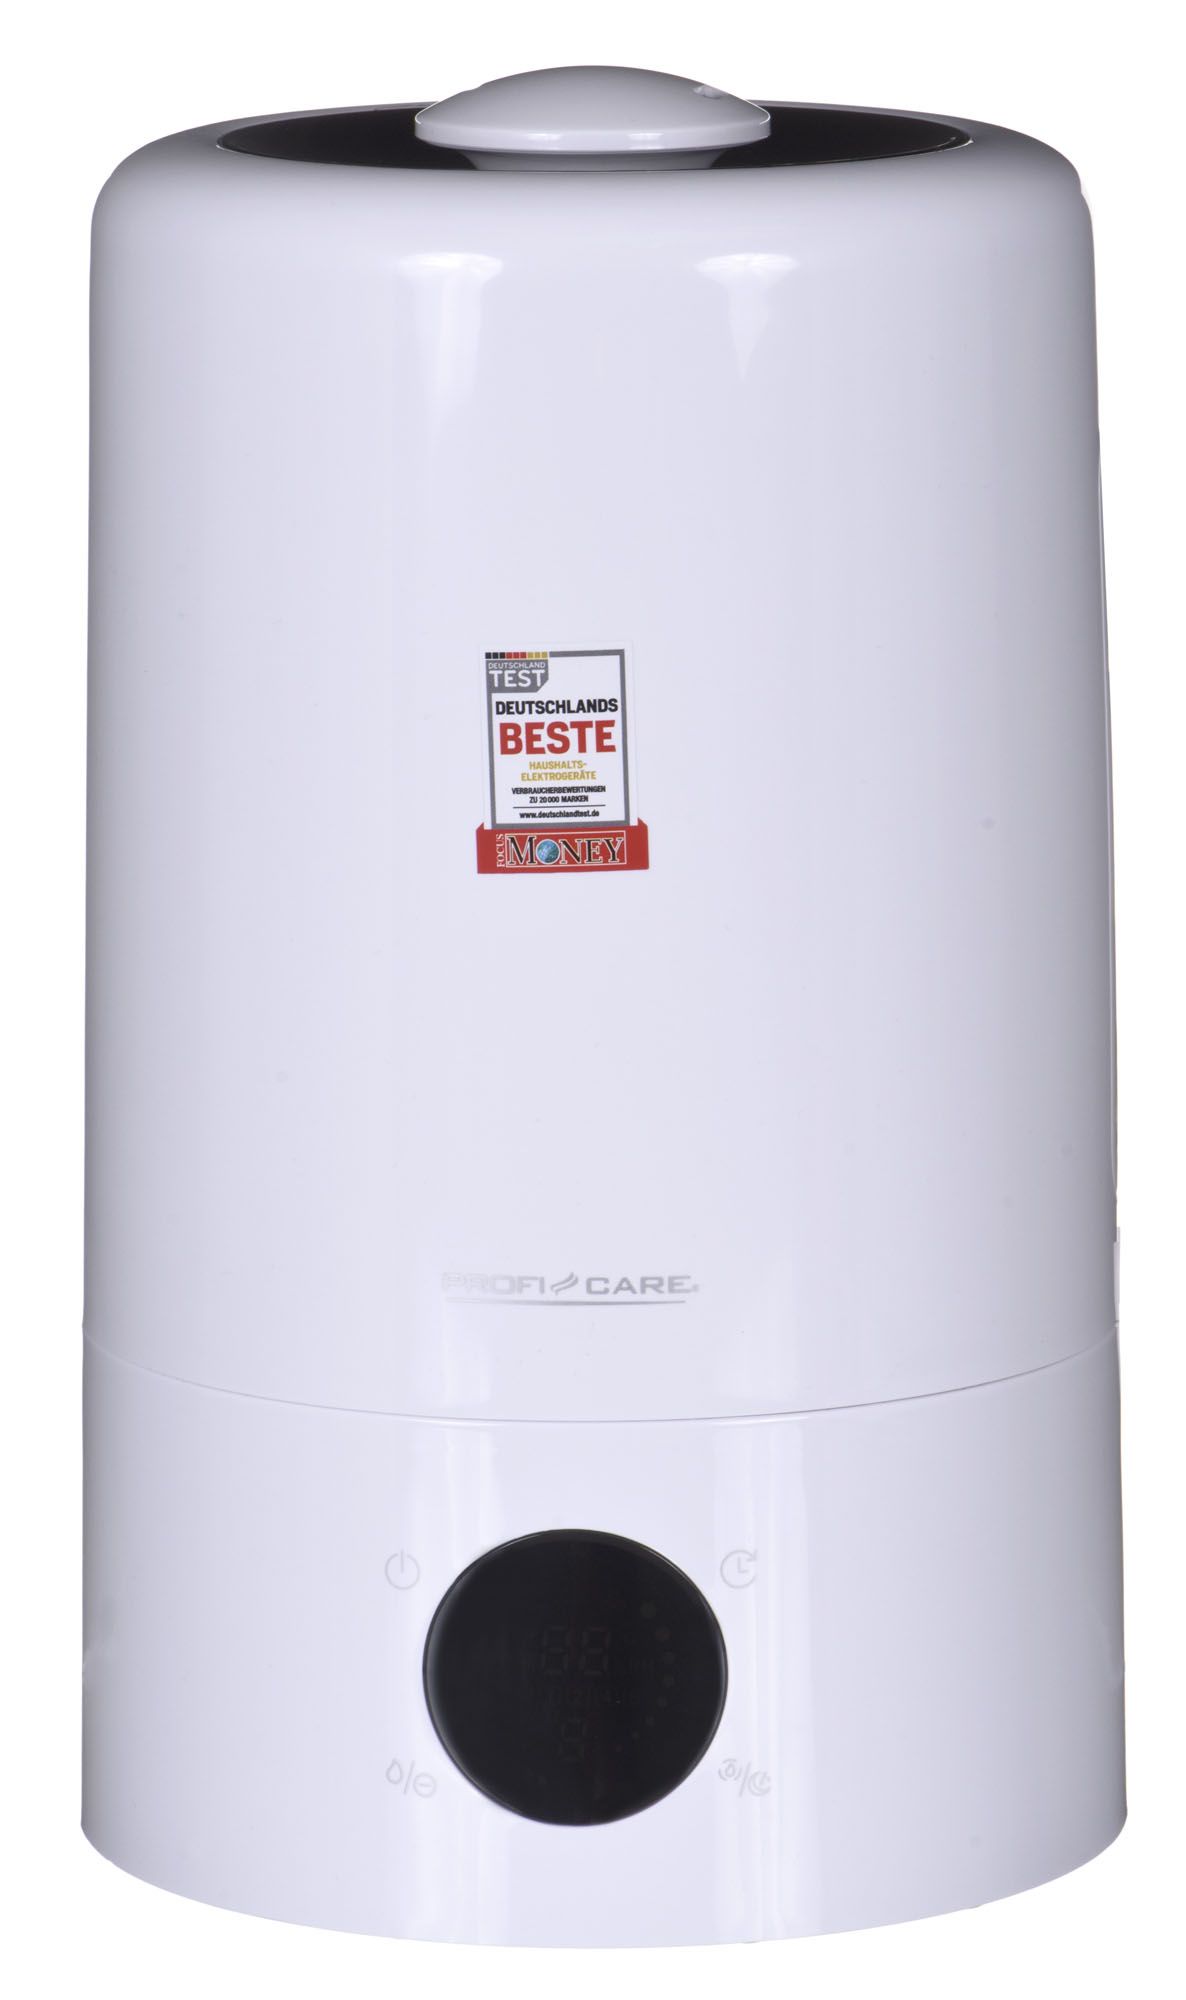 Humidifier ProfiCare PC-LB 3077 white